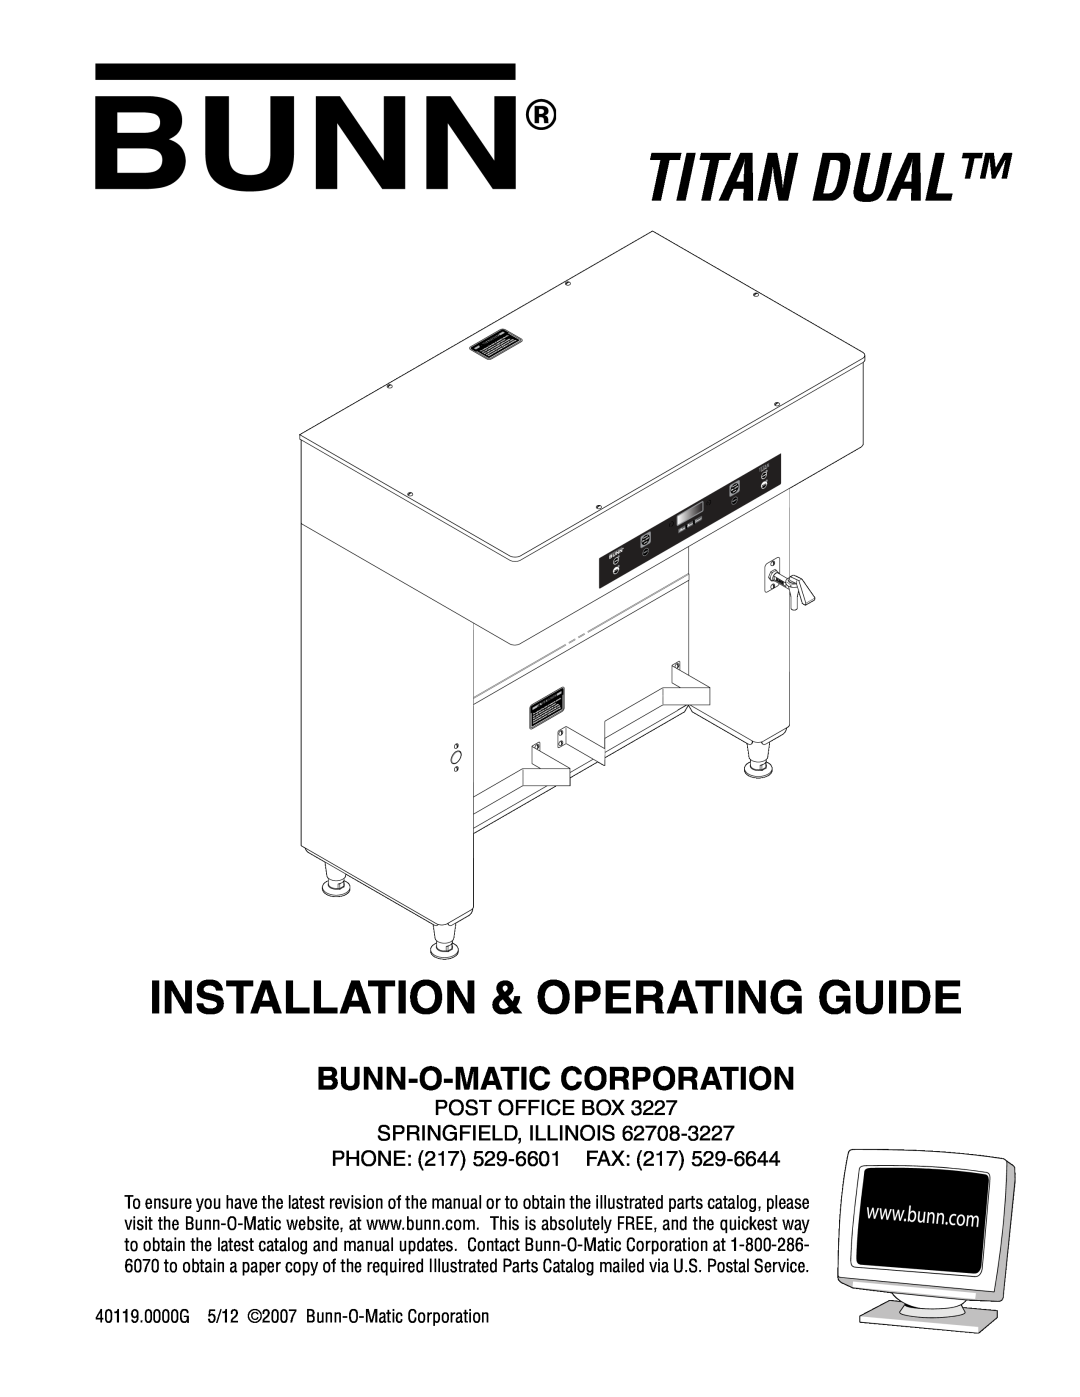 Bunn 40119.0000G manual Titan Dual, Installation & Operating Guide, Bunn-O-Maticcorporation 